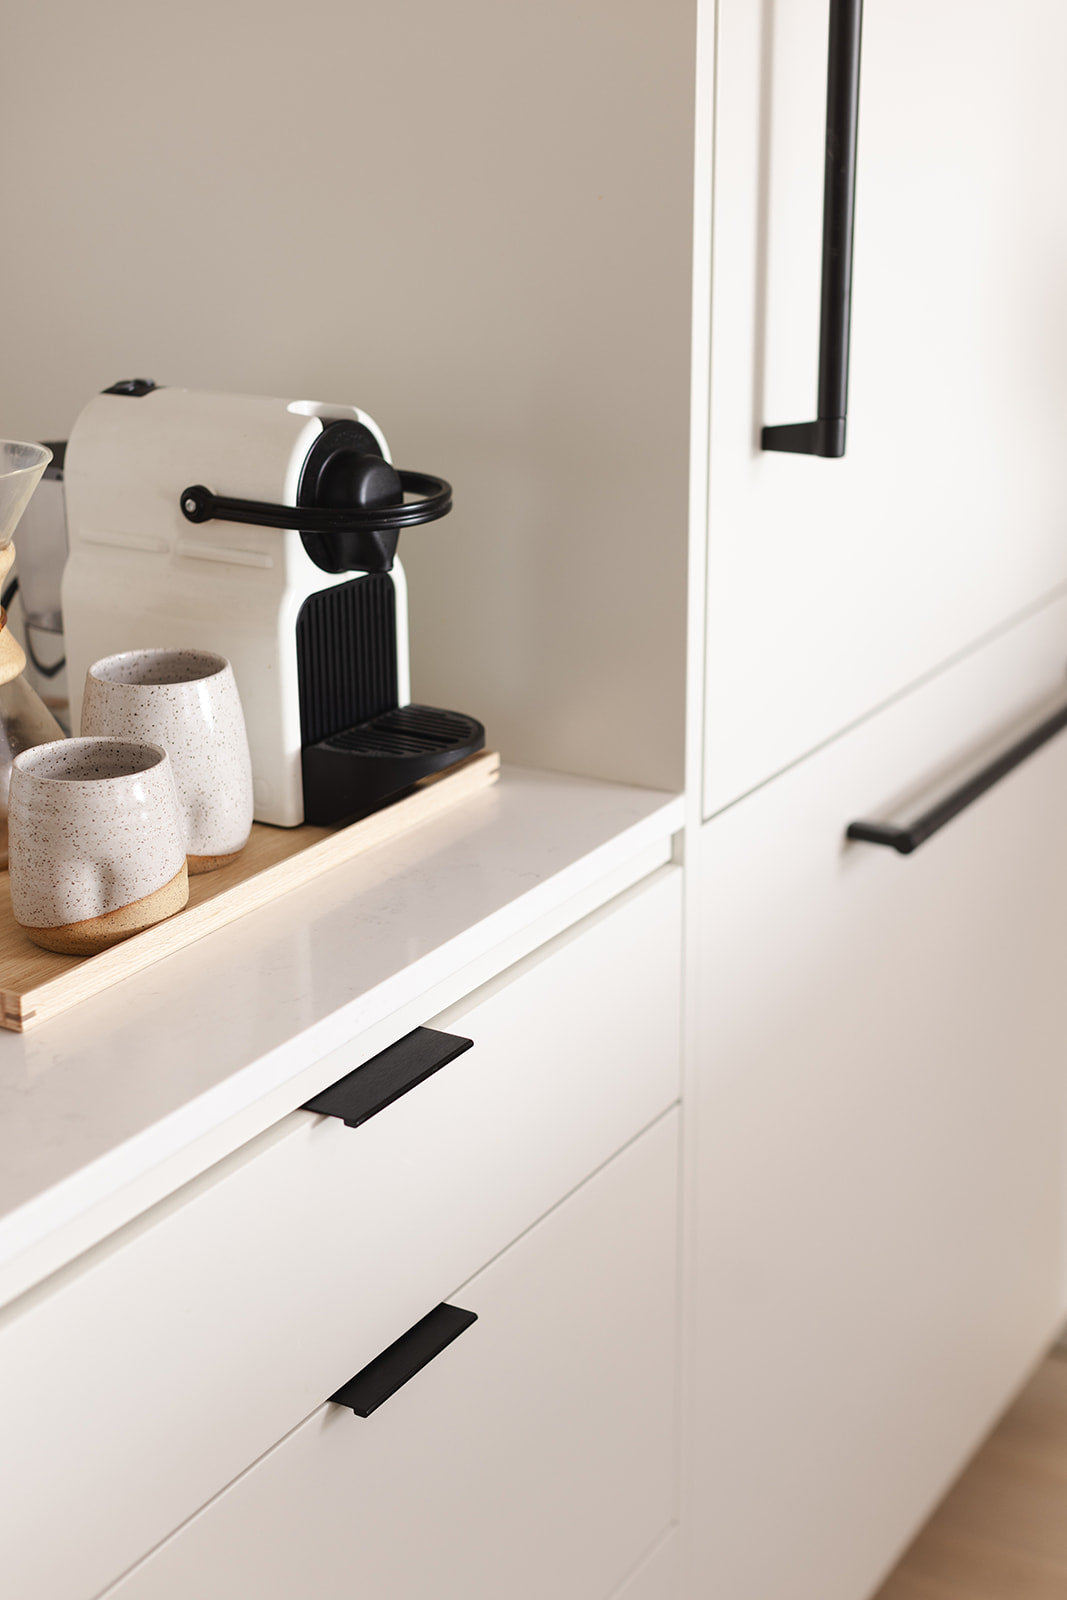 off white flat front swede kitchen with matte black hardware integrated fridge designed by studio hemma